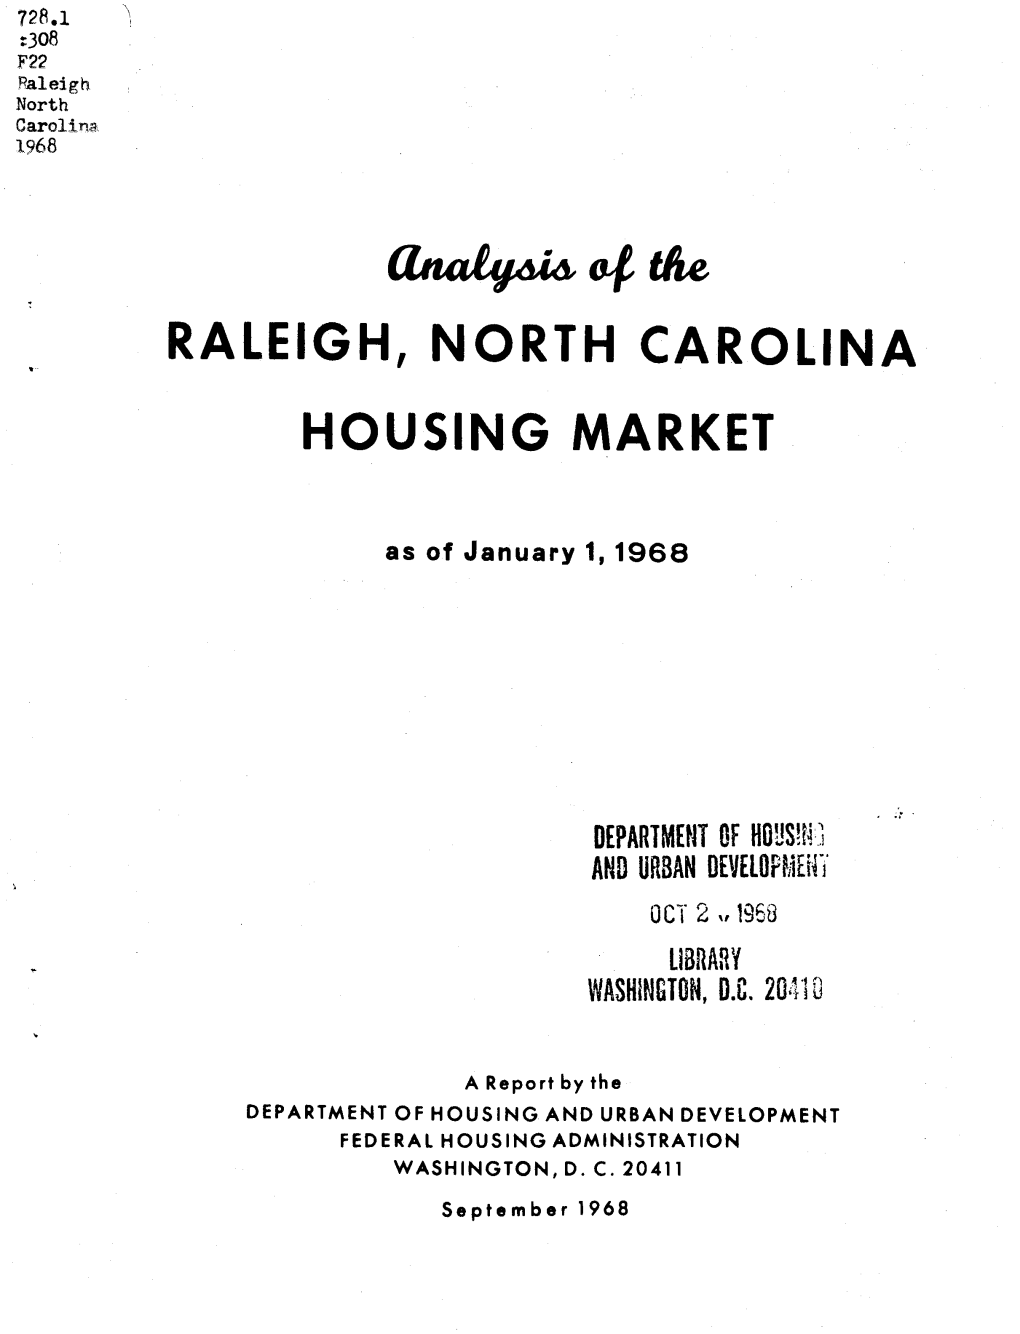 Analysis of the Raleigh, North Carolina Housing Market (1968)